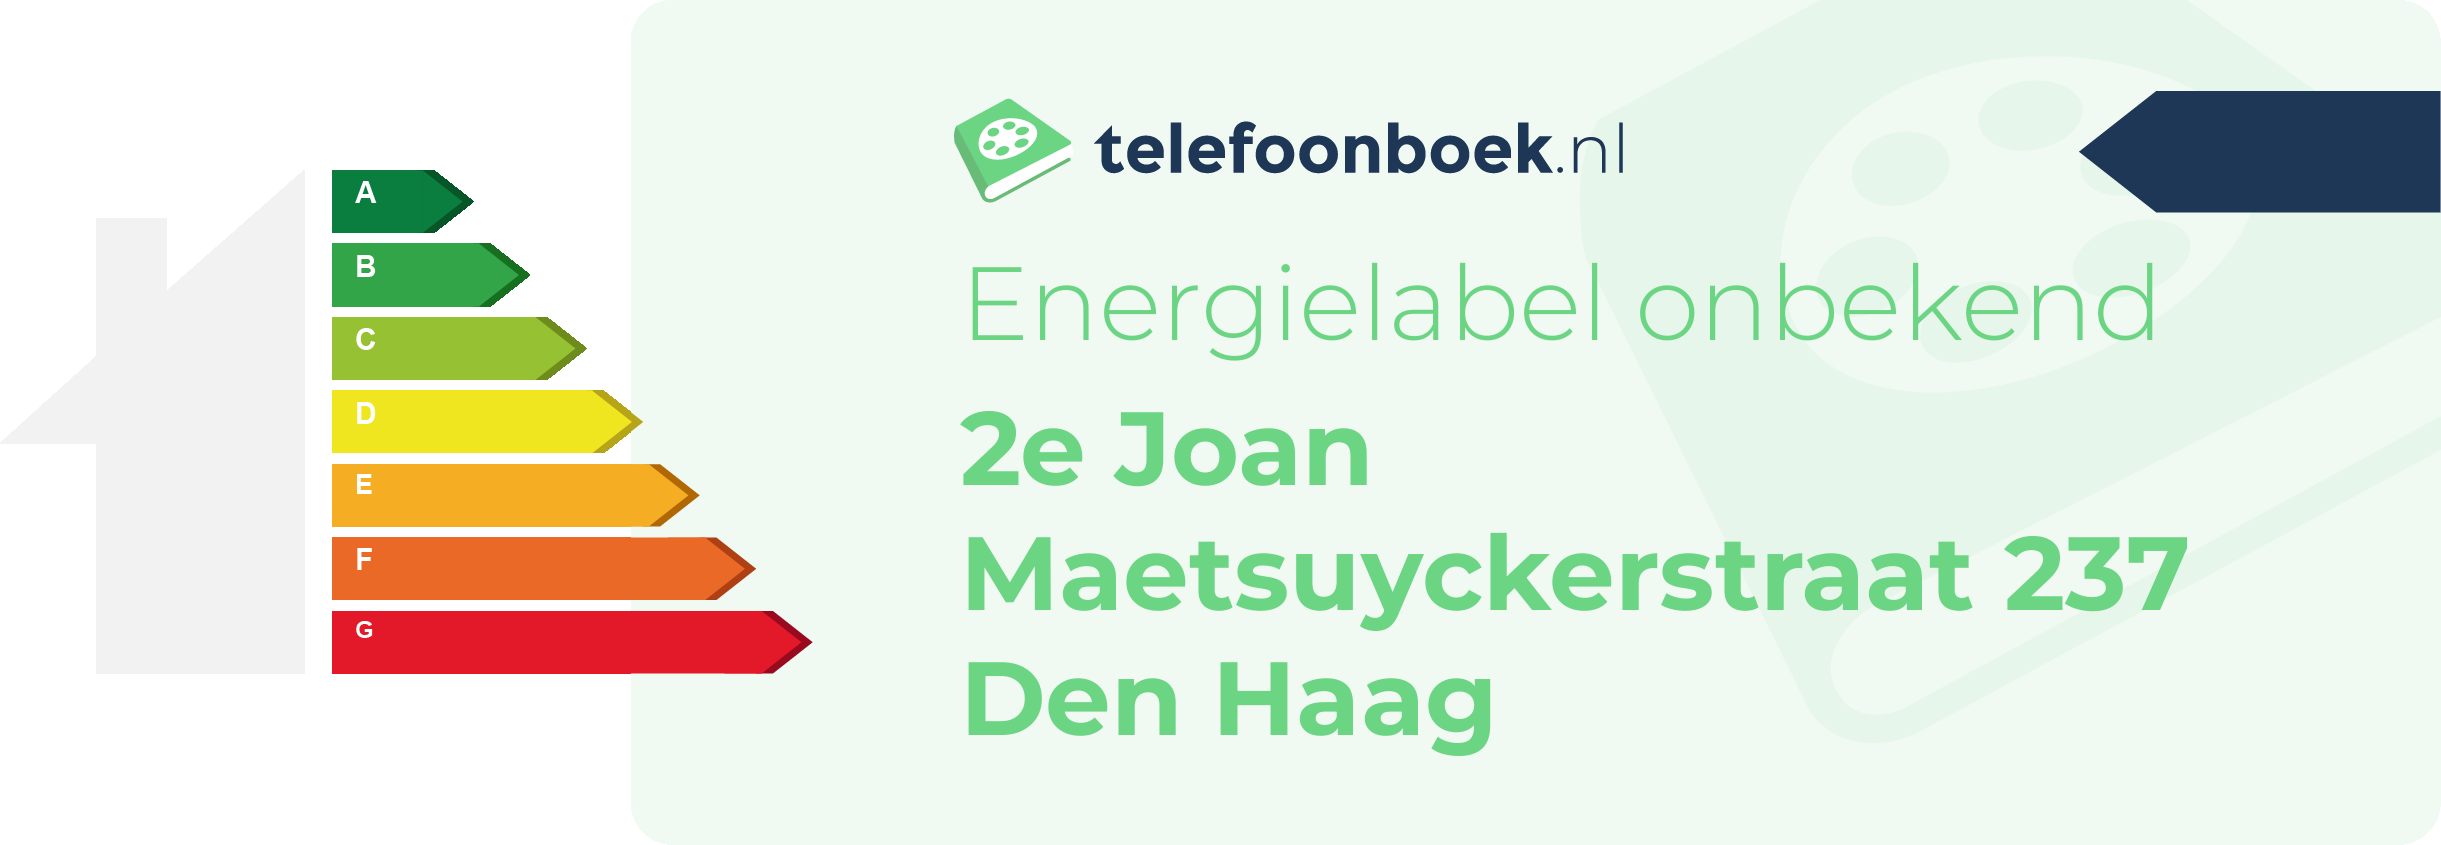 Energielabel 2e Joan Maetsuyckerstraat 237 Den Haag